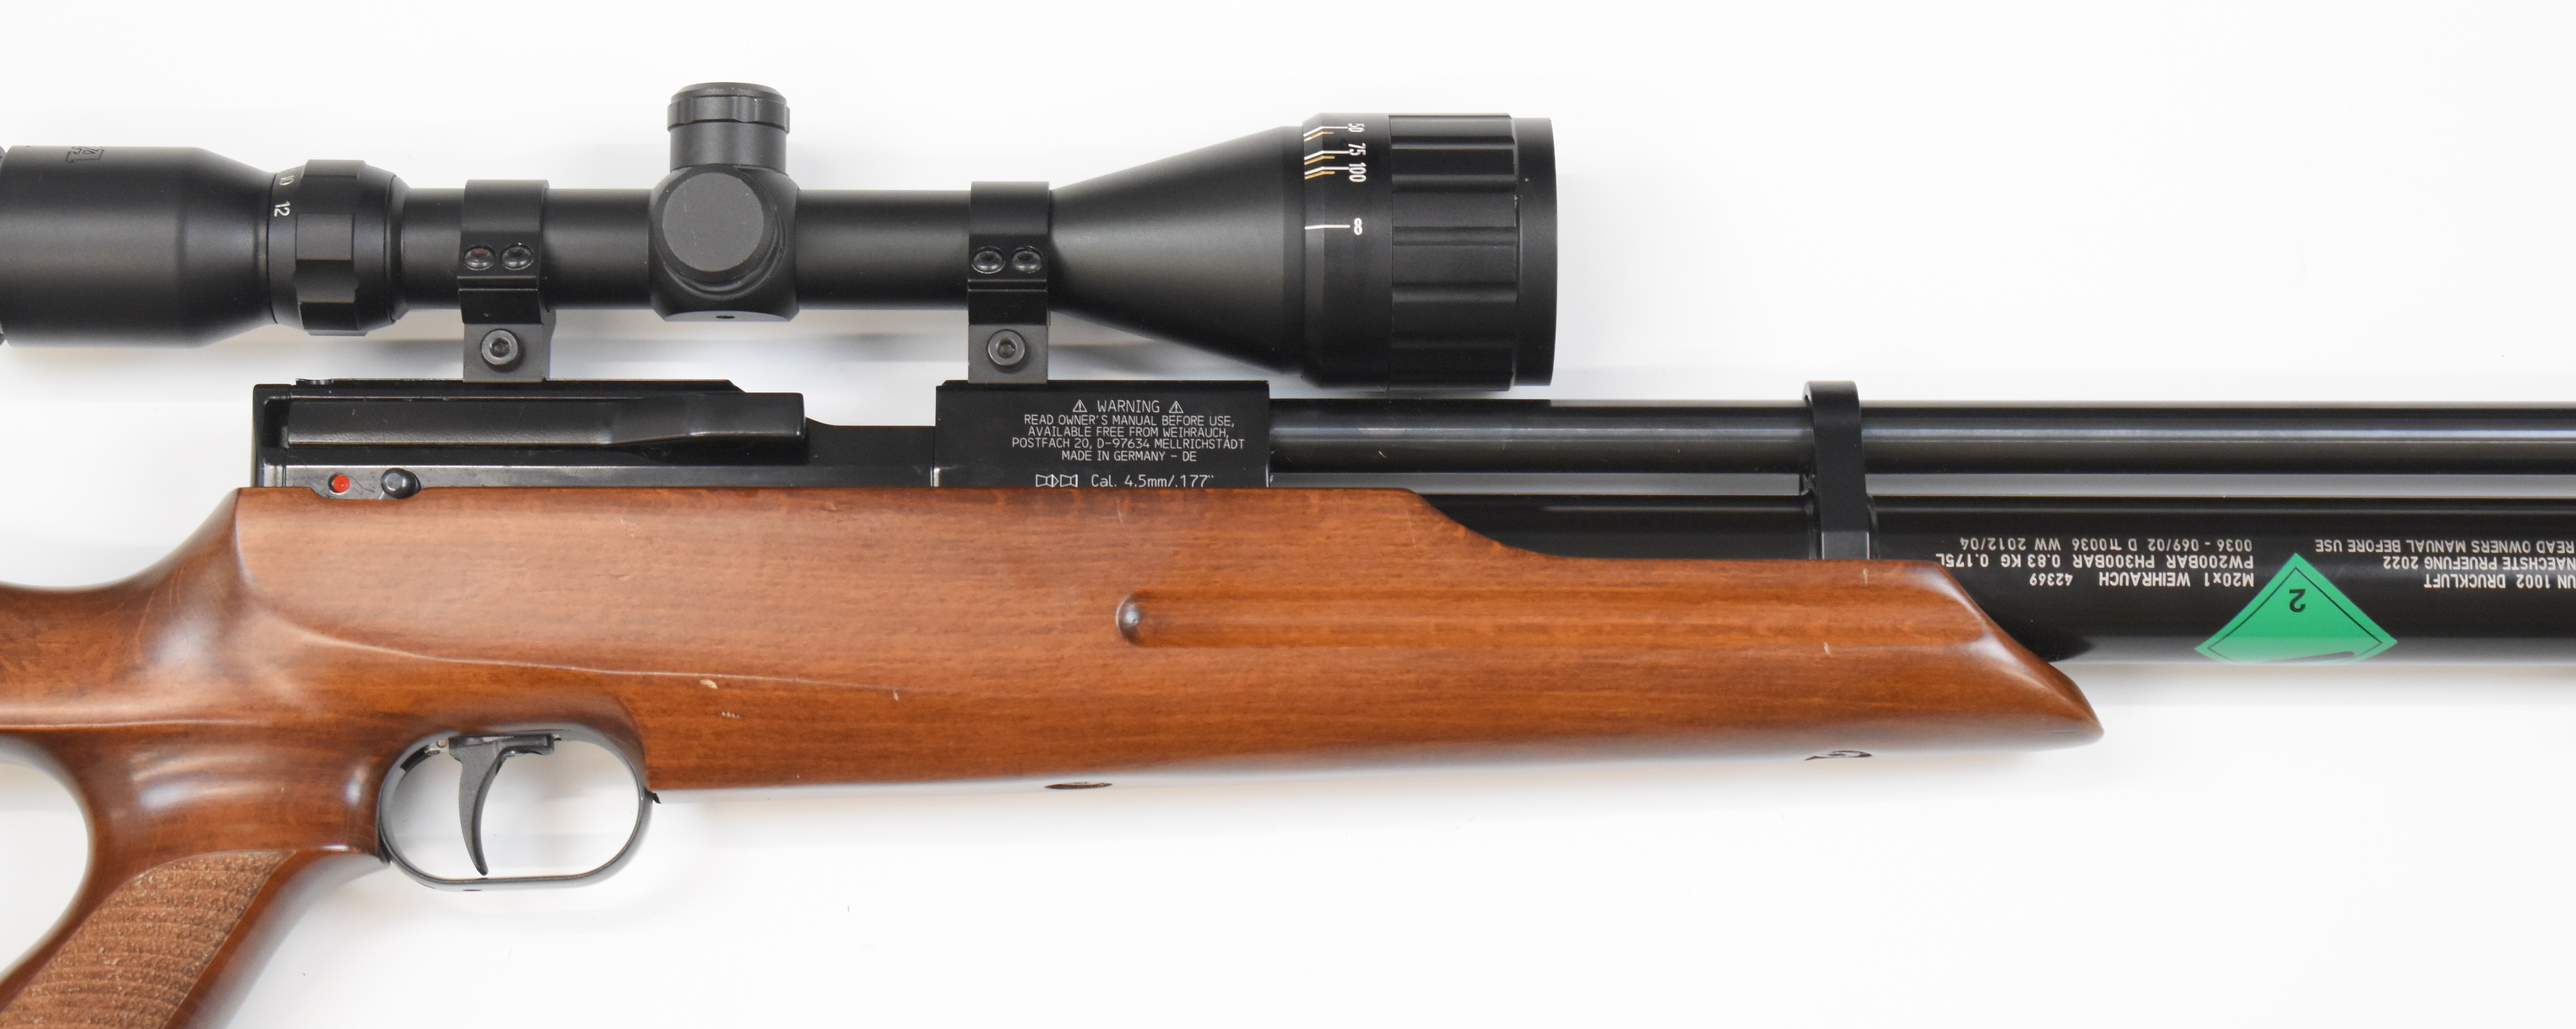 Weihrauch HW101 .177 PCP air rifle with textured semi-pistol grip, raised cheek piece, adjustable - Image 4 of 10